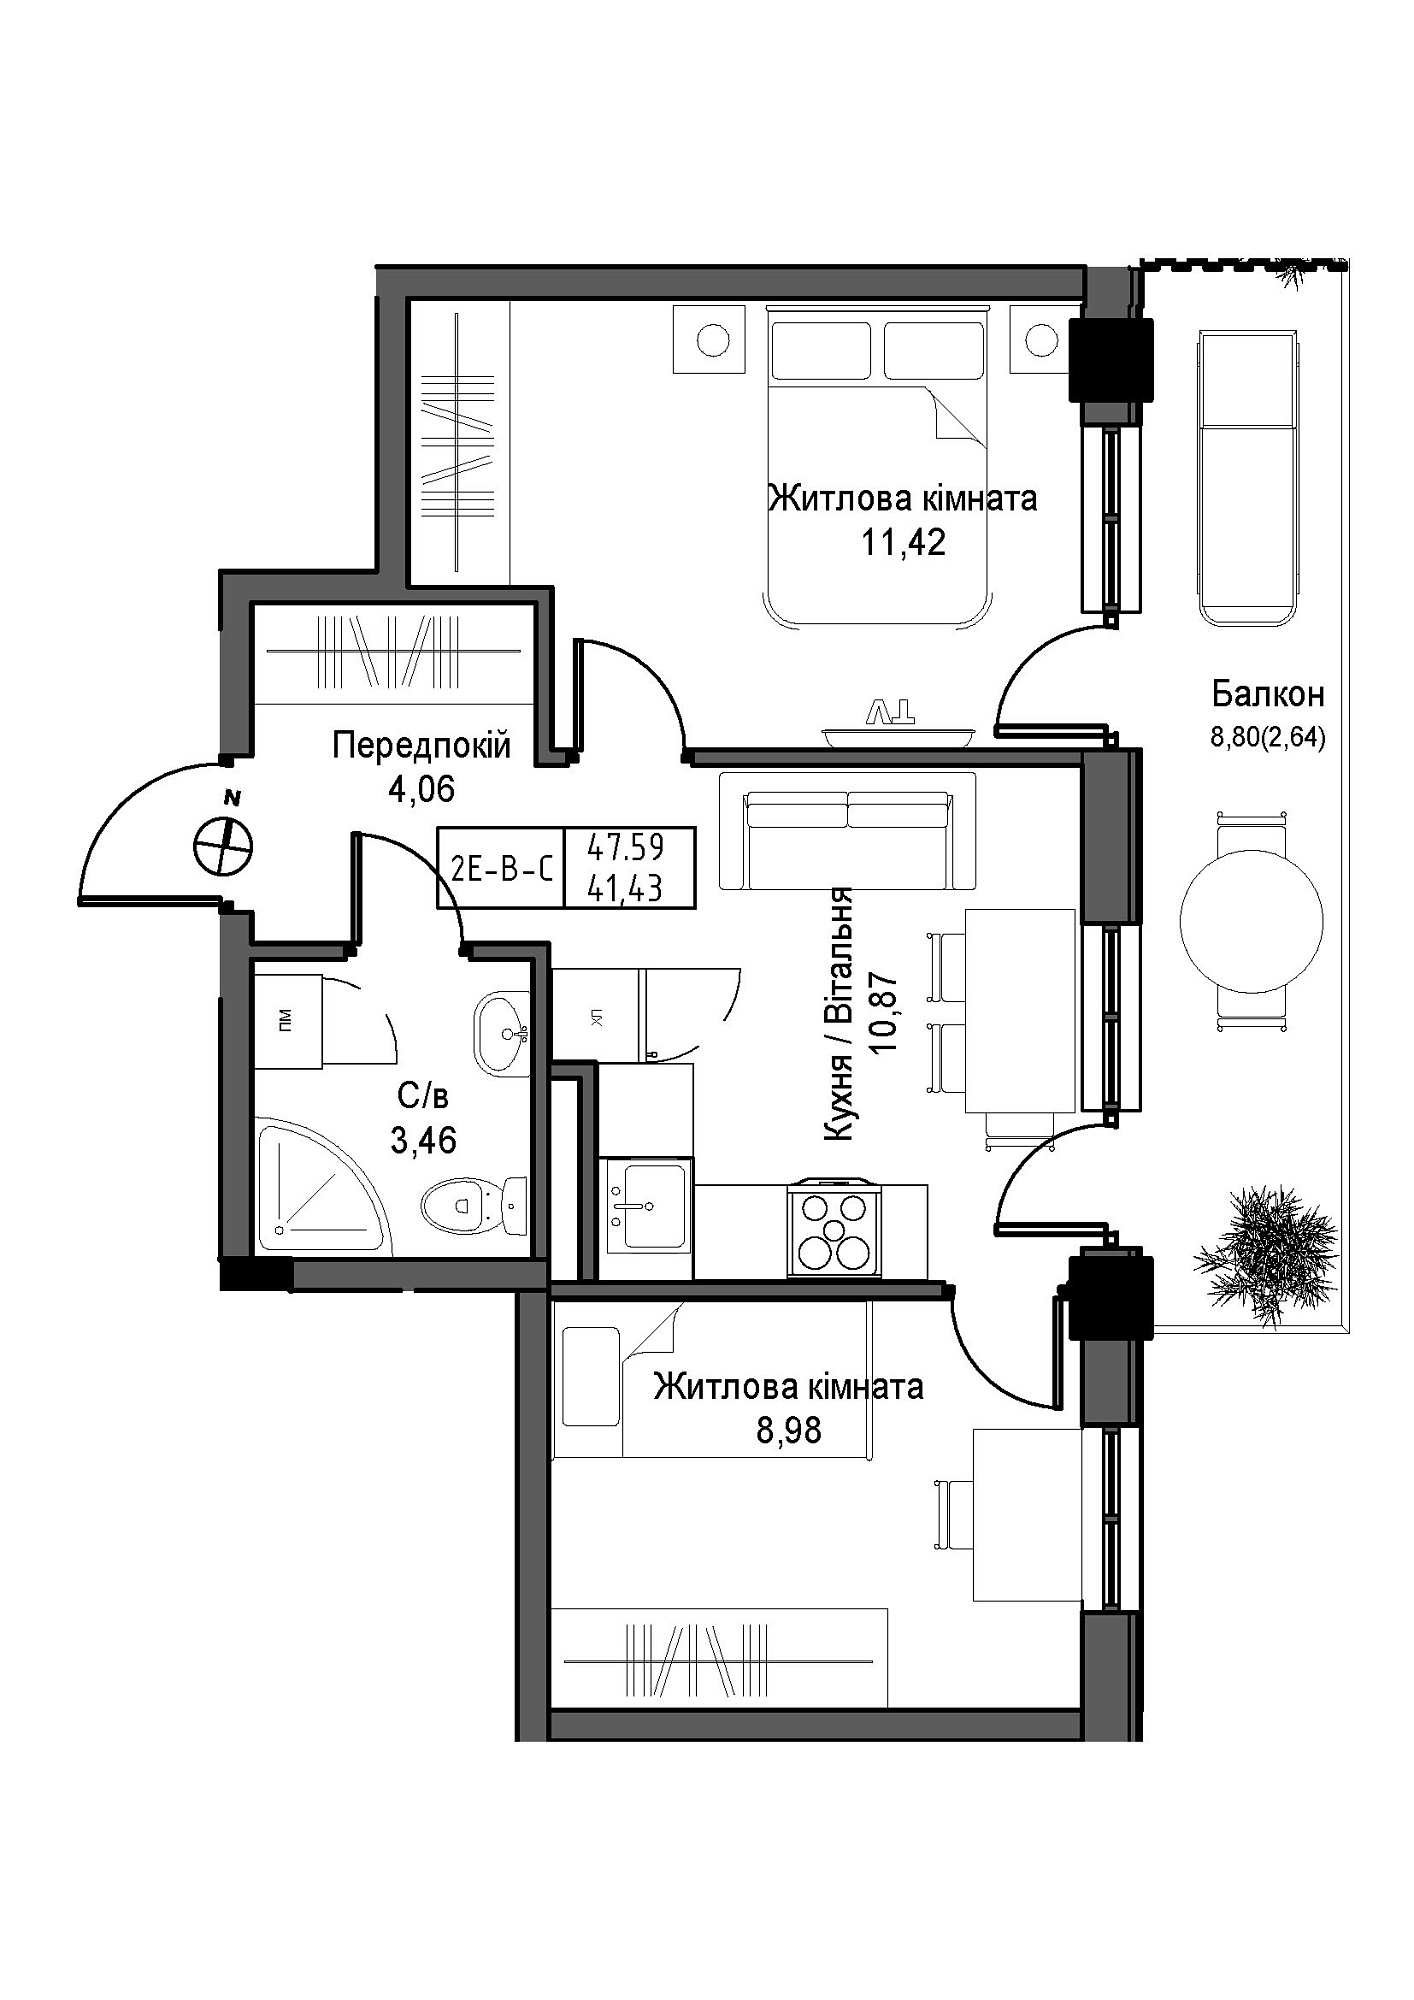 Планування 2-к квартира площею 41.43м2, UM-007-12/0007.